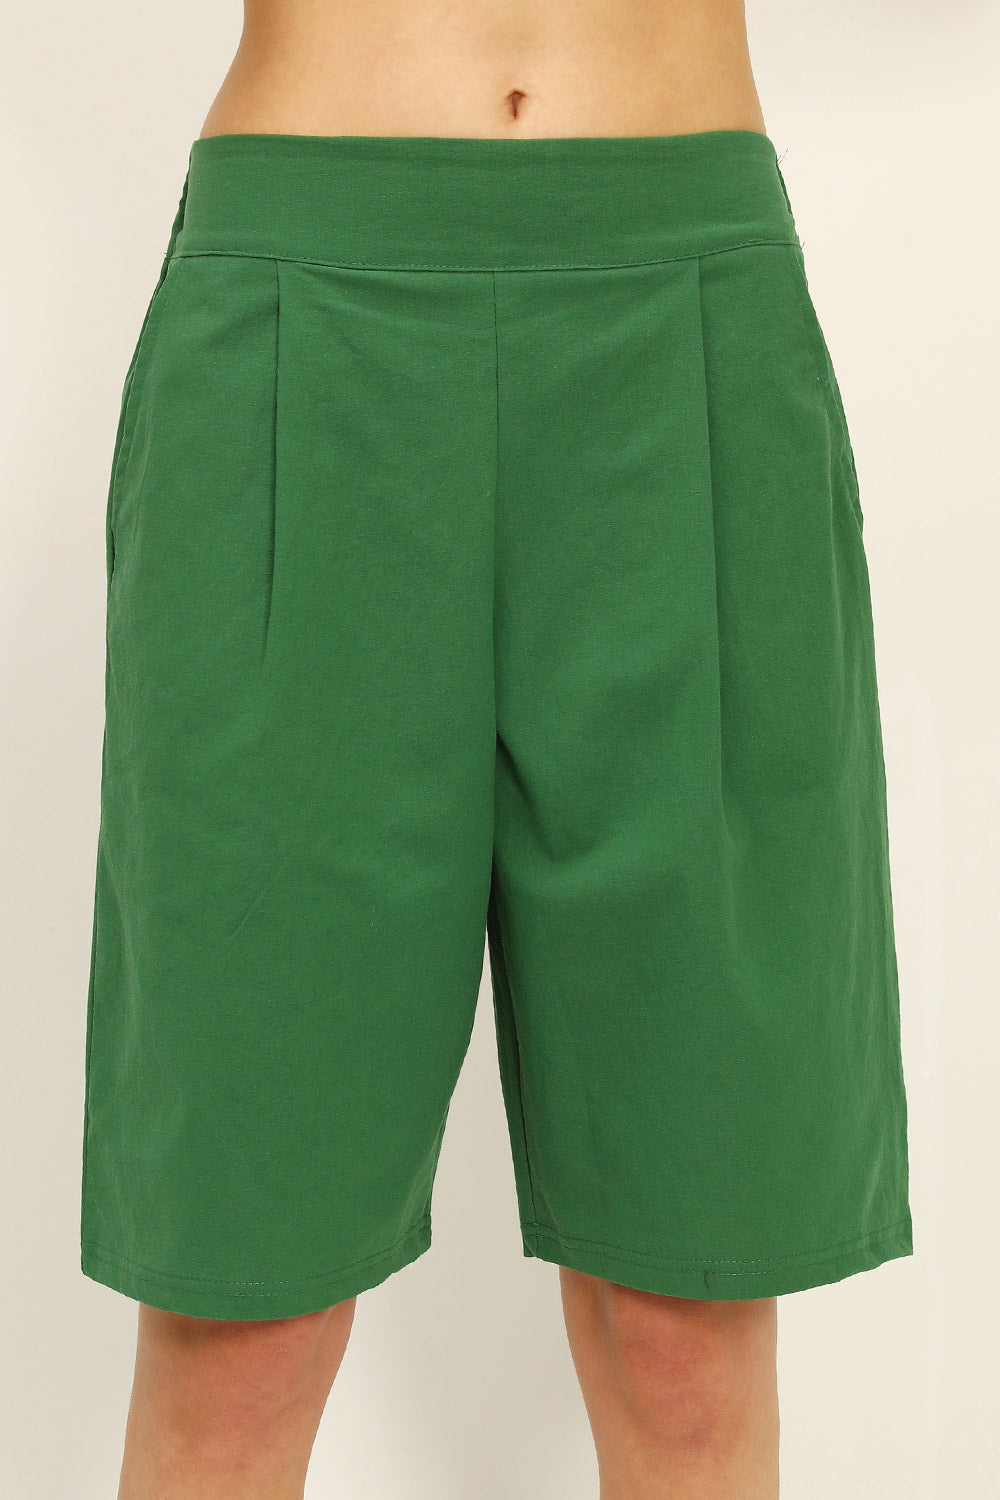 storets.com Harmony Pintuck Bermuda Shorts